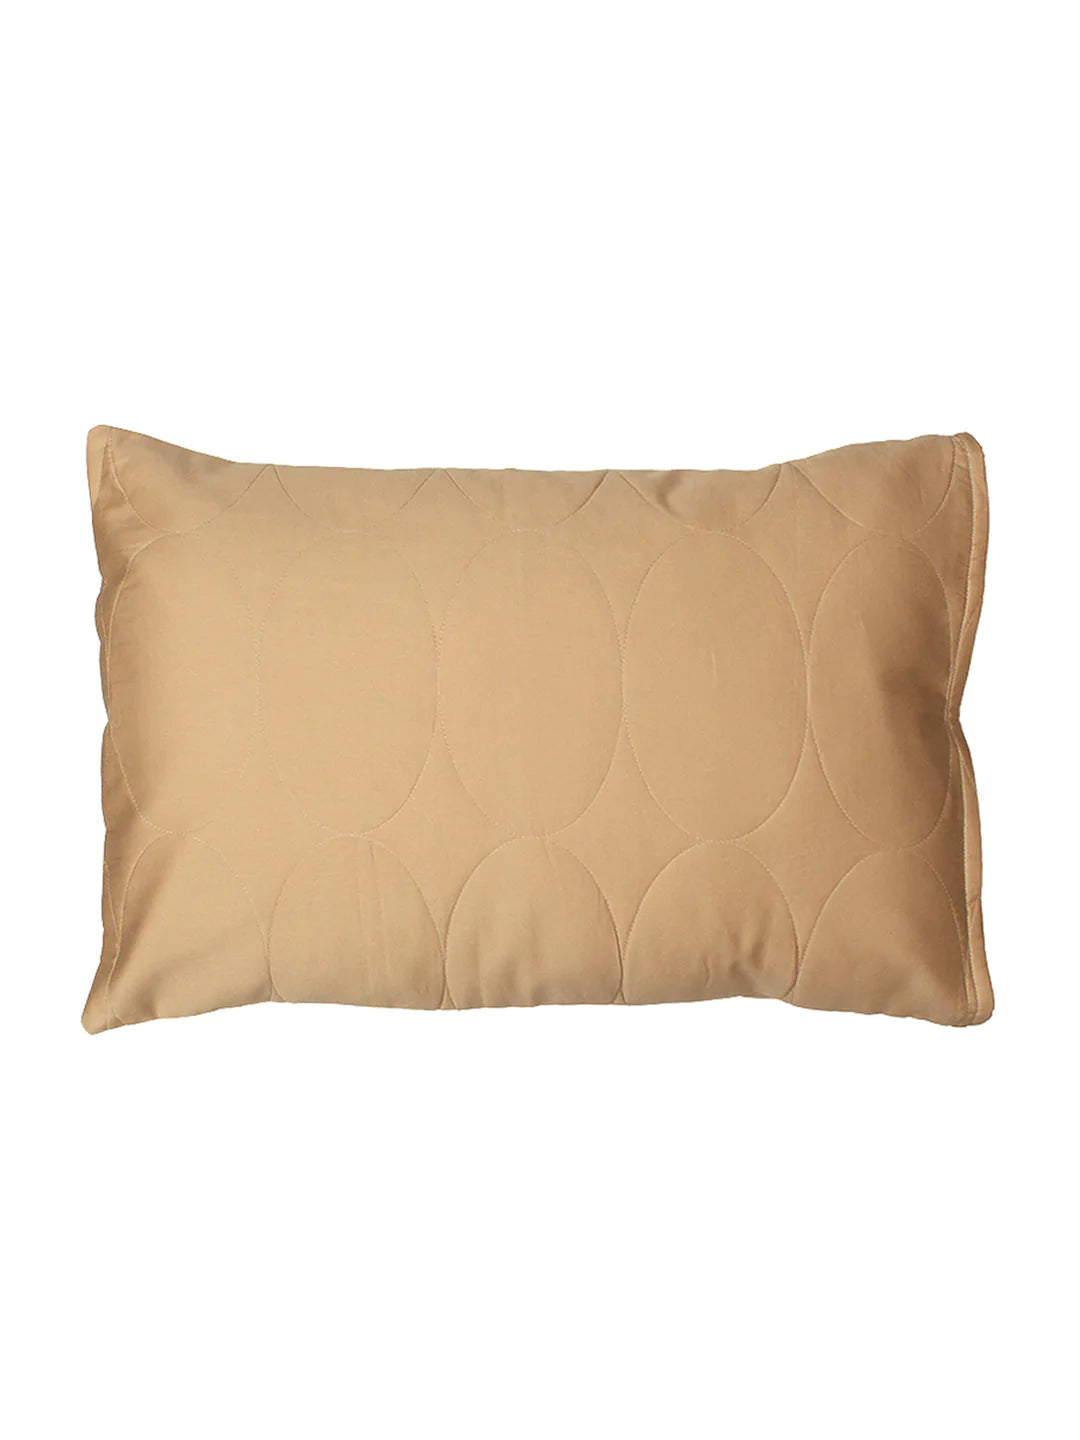 Maati Beige Pillow Cover